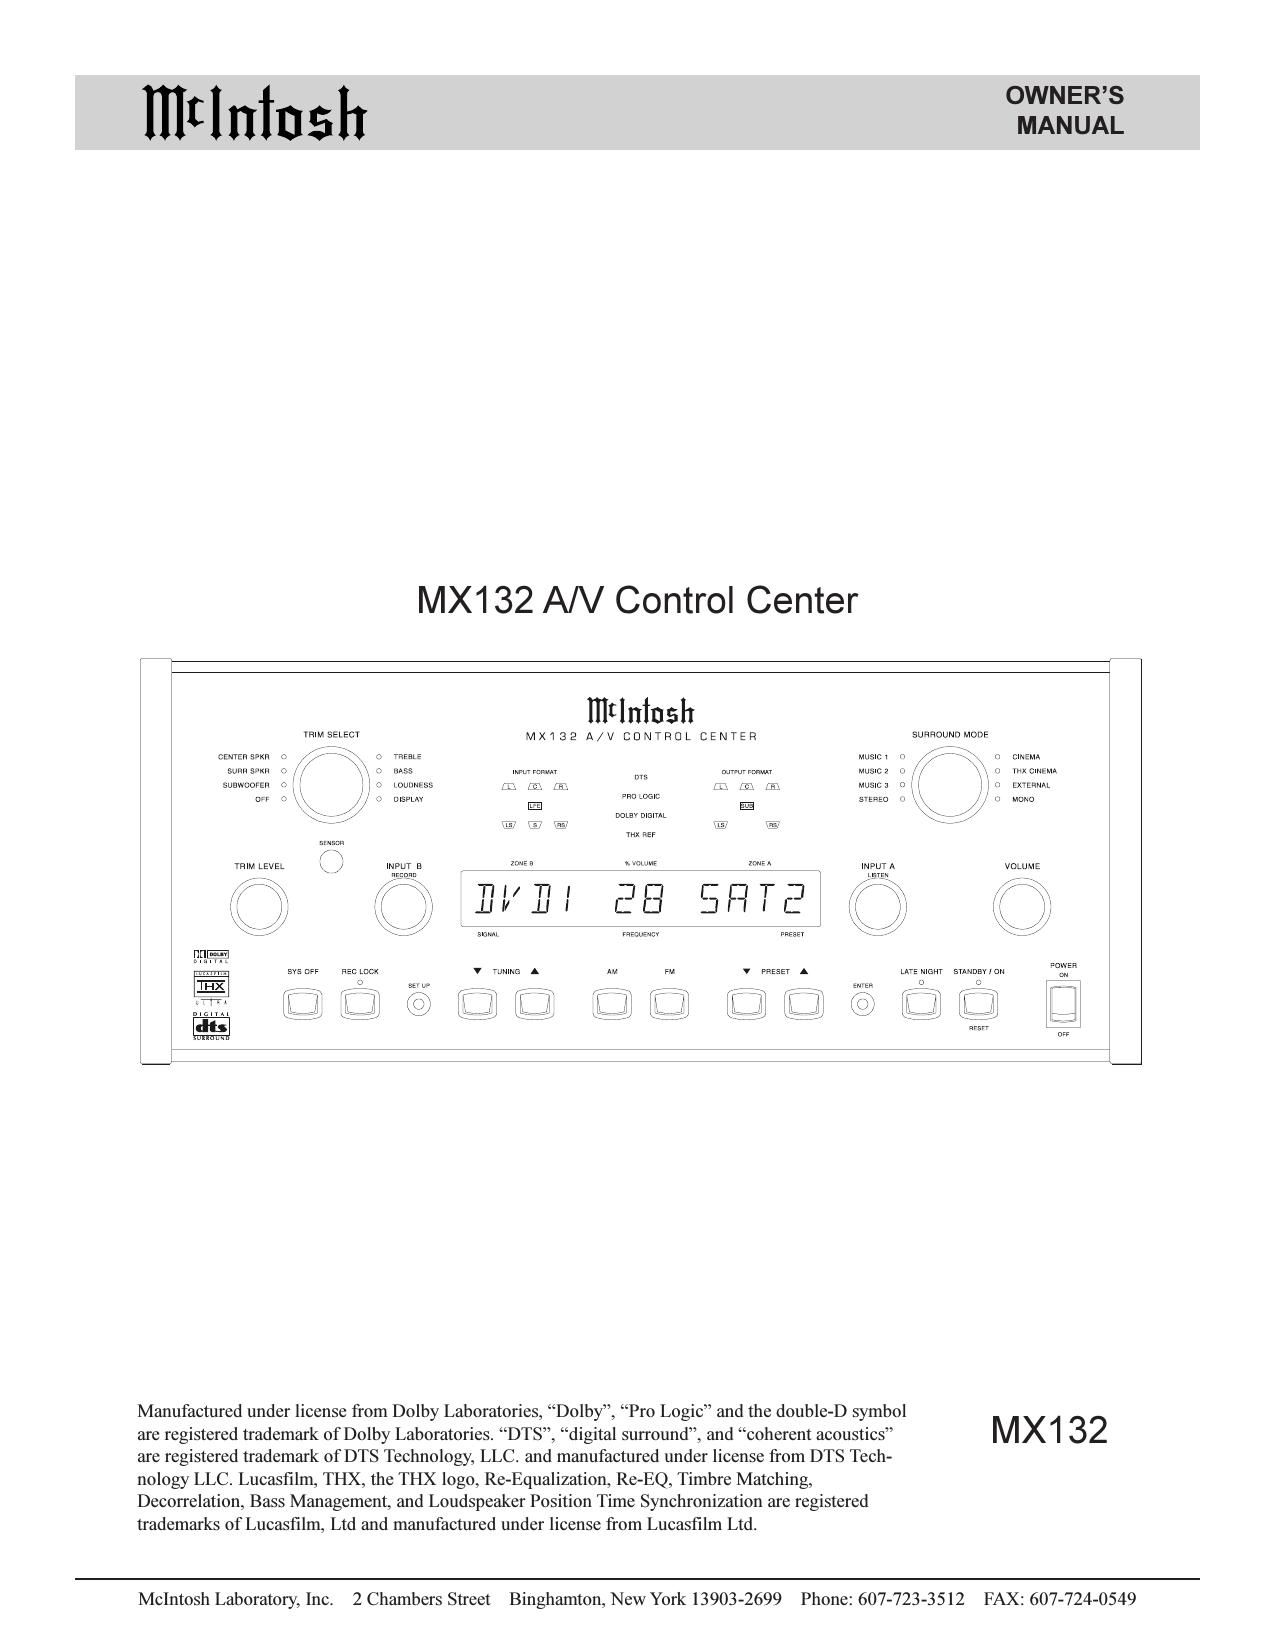 McIntosh MX 132 Owners Manual